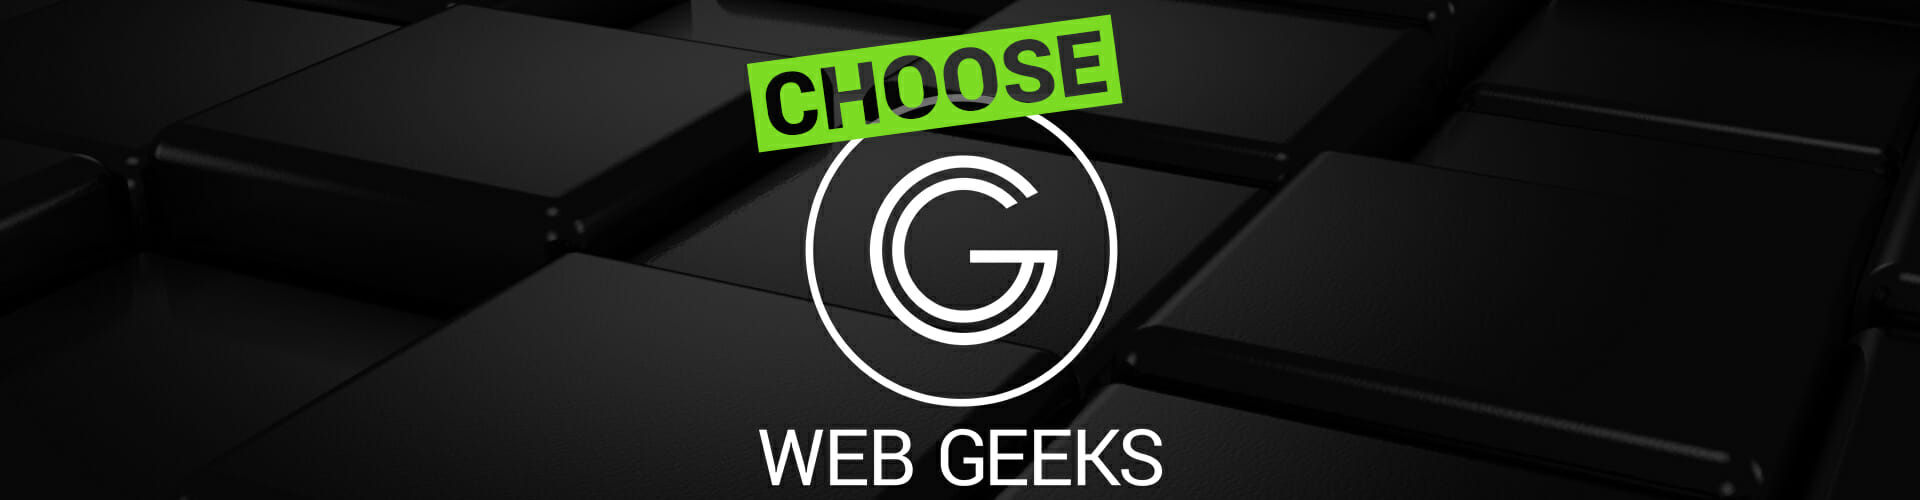 Choose Web Geeks for Social Media Marketing Services in Windsor